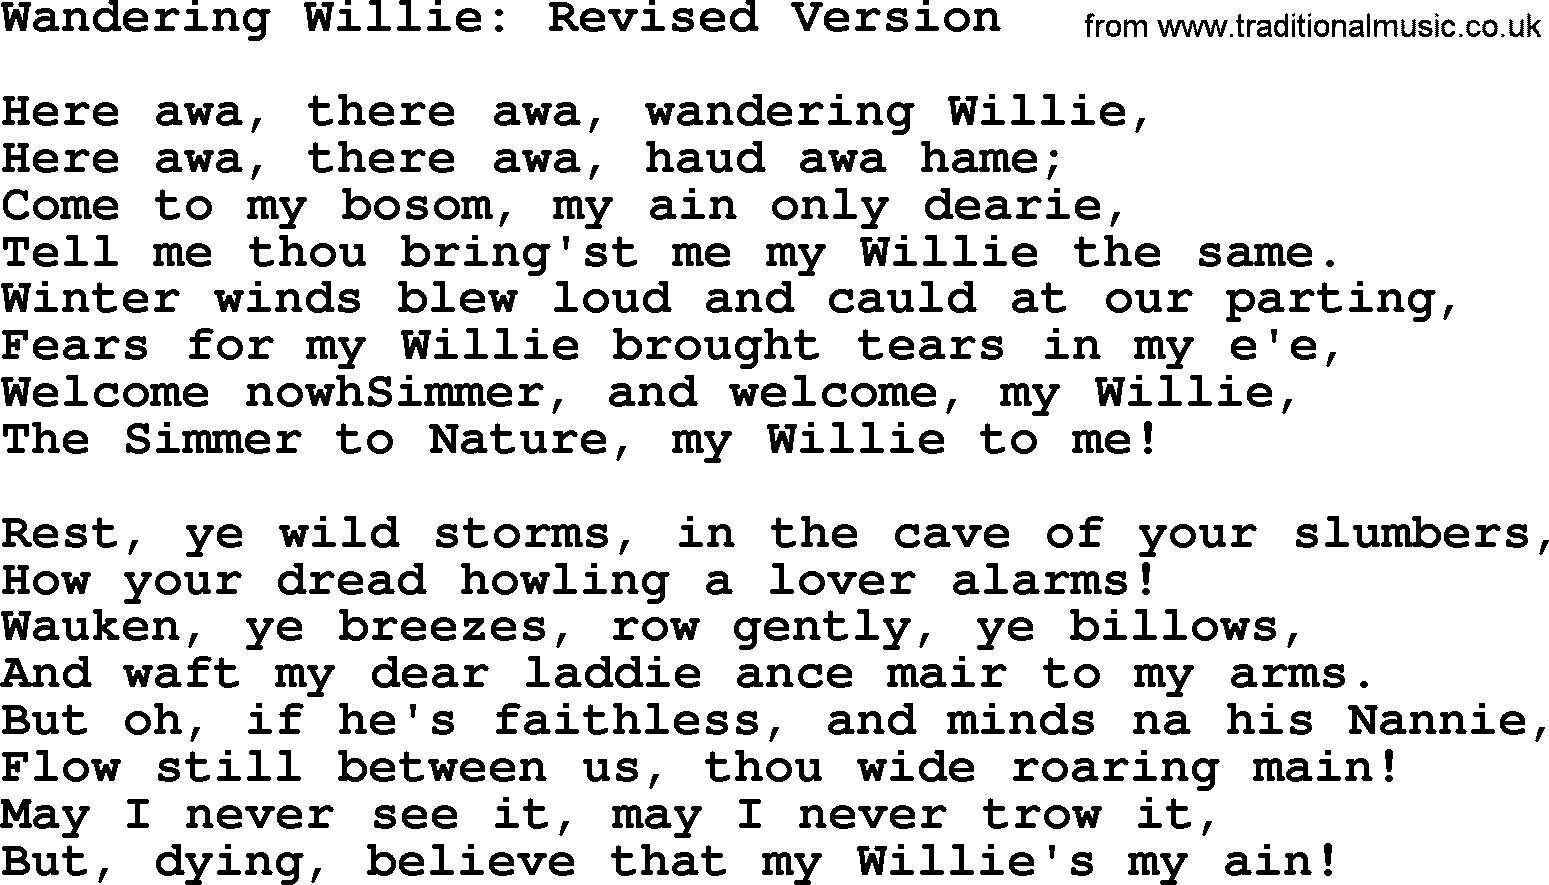 Robert Burns Songs & Lyrics: Wandering Willie Revised Version